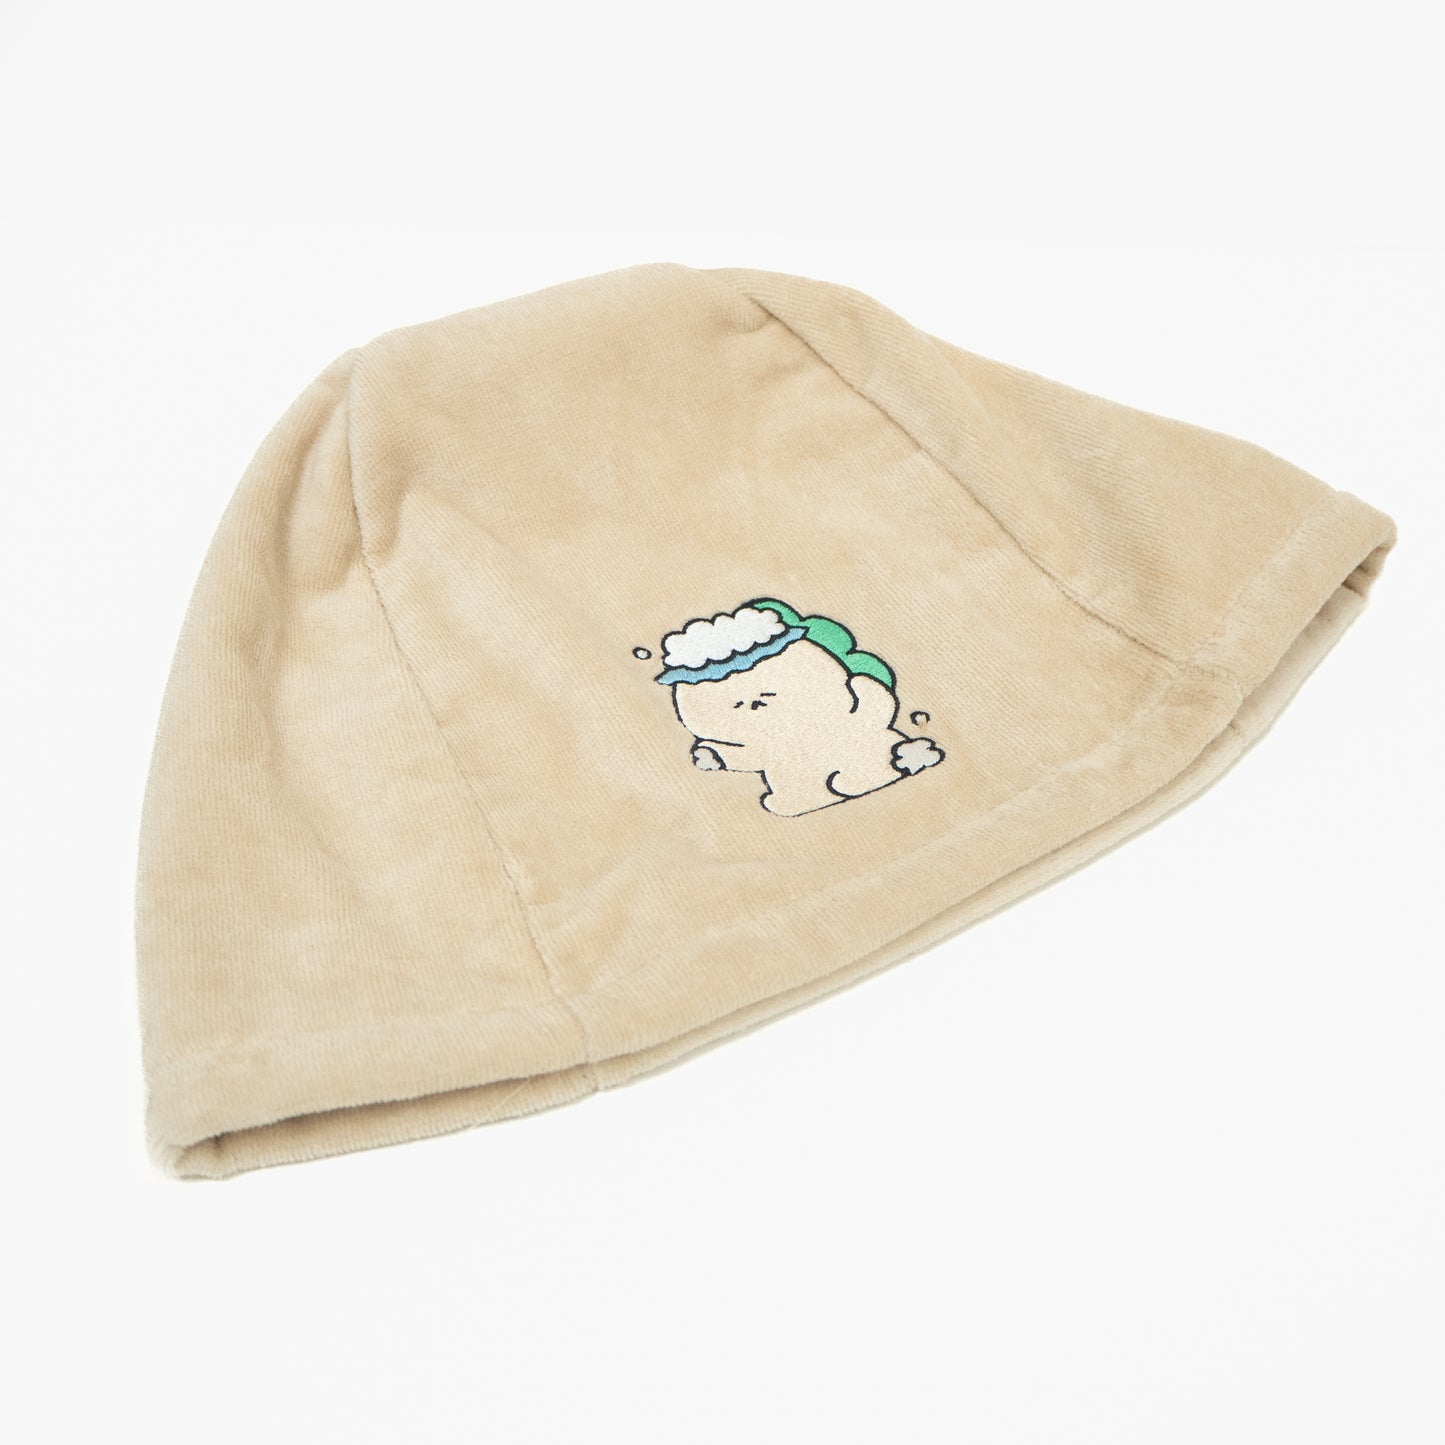 [Troublesome Zaurus] Sauna Hat [Shipped in early January]